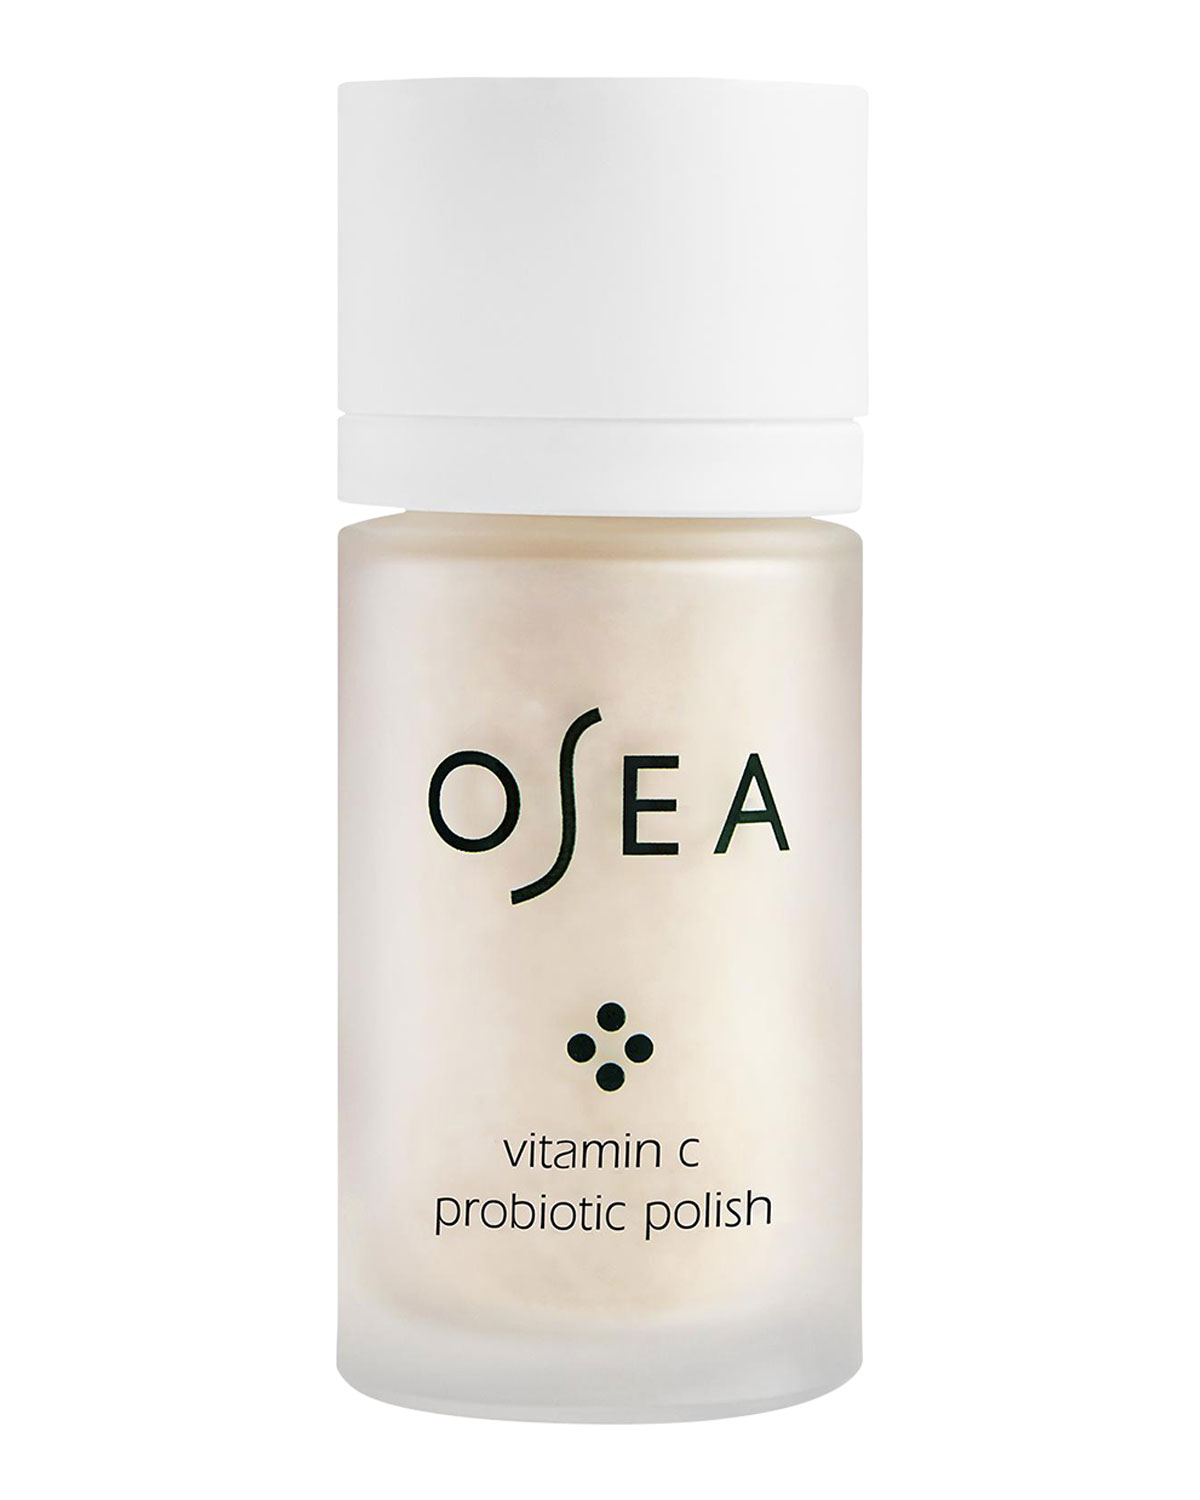 OSEA 1 oz. Vitamin C Probiotic Polish